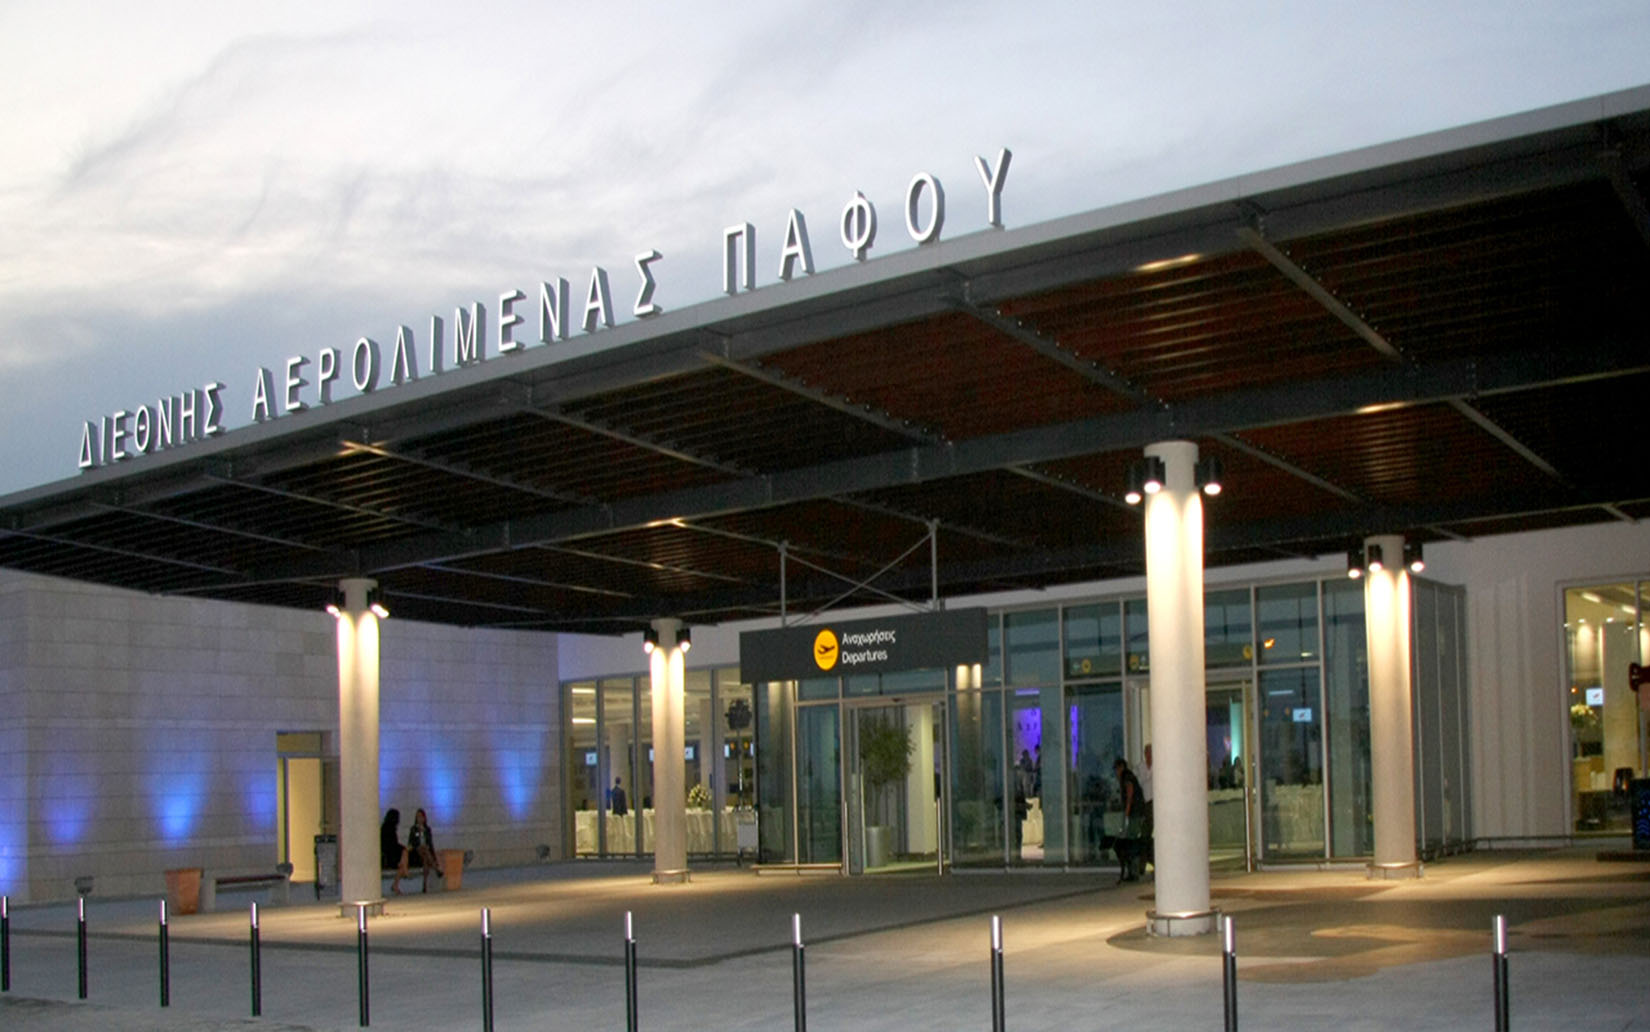 transfers paphos airport